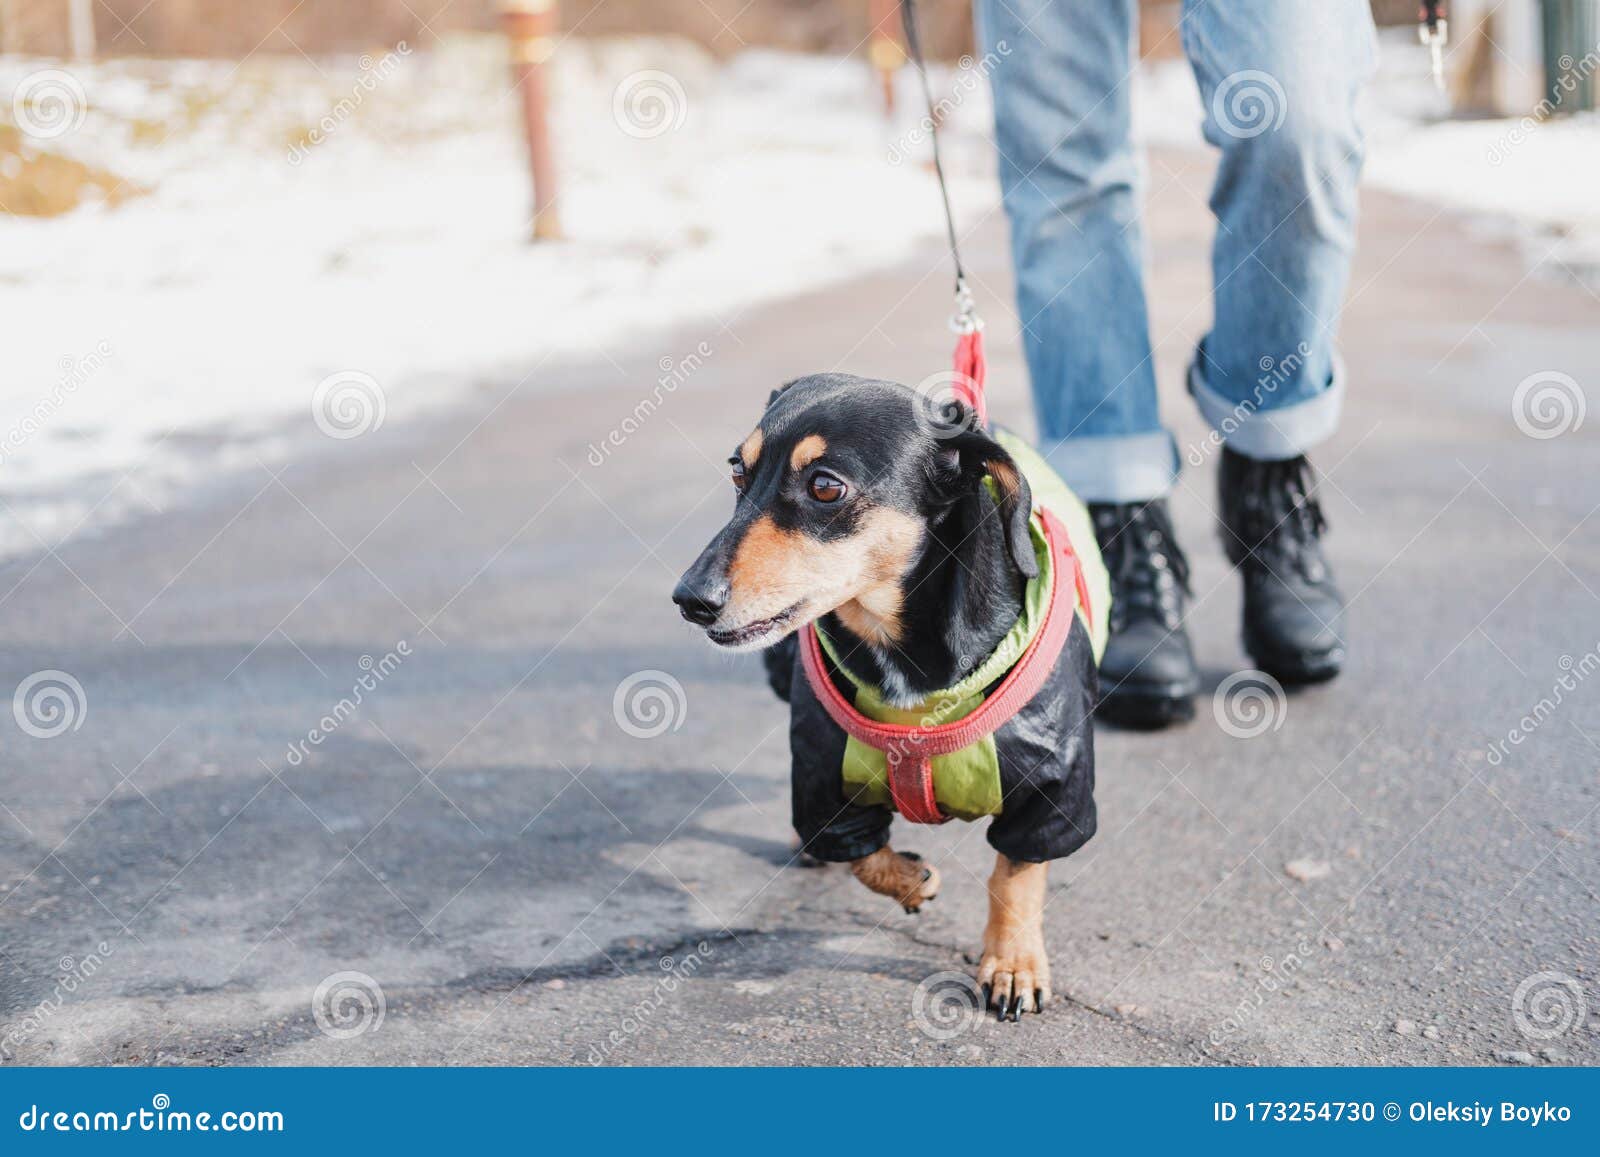 Walking A Dachshund Dog On The Leash. Stock Photo Image